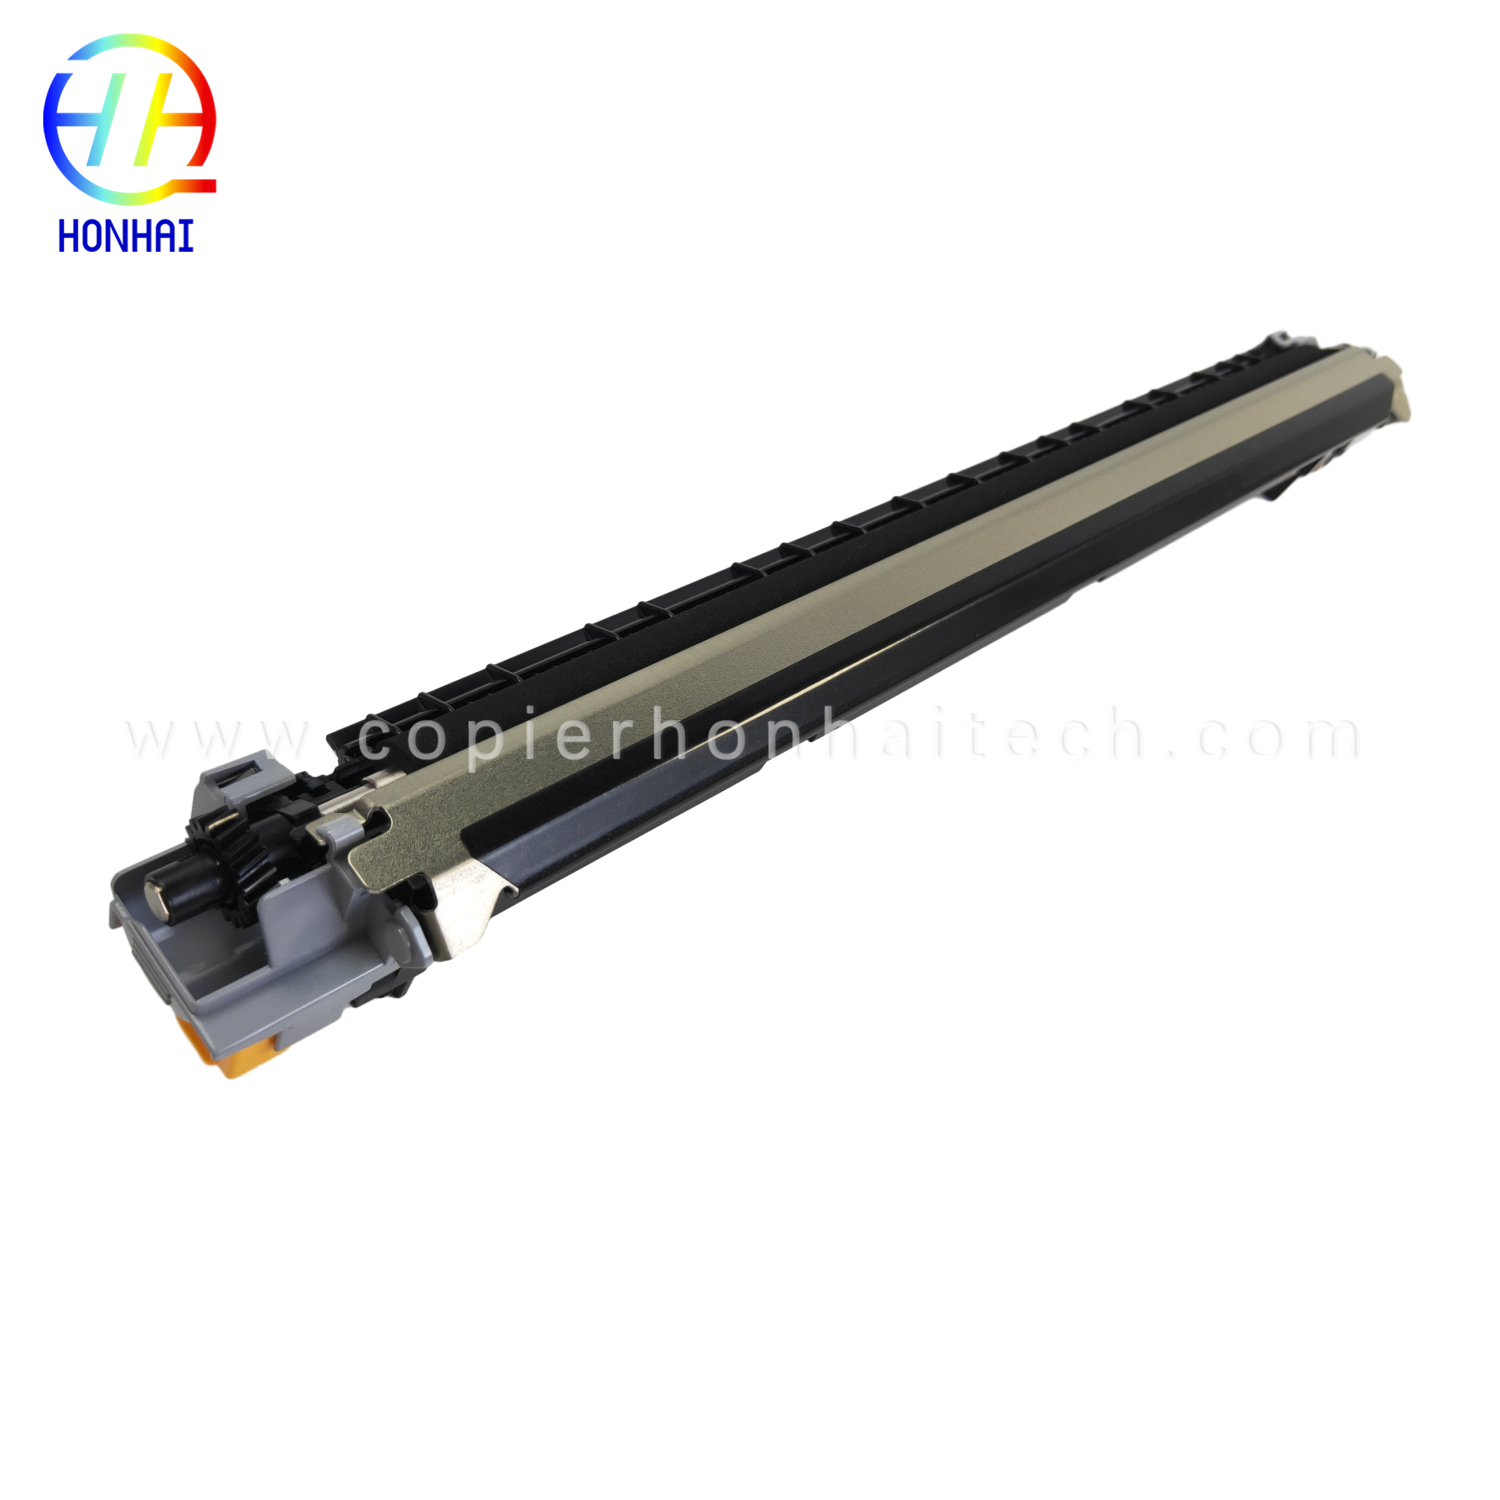 https://www.copierhonhaitech.com/upper-fuser-roller-for-kyocera-ta3010i-3510i-product/